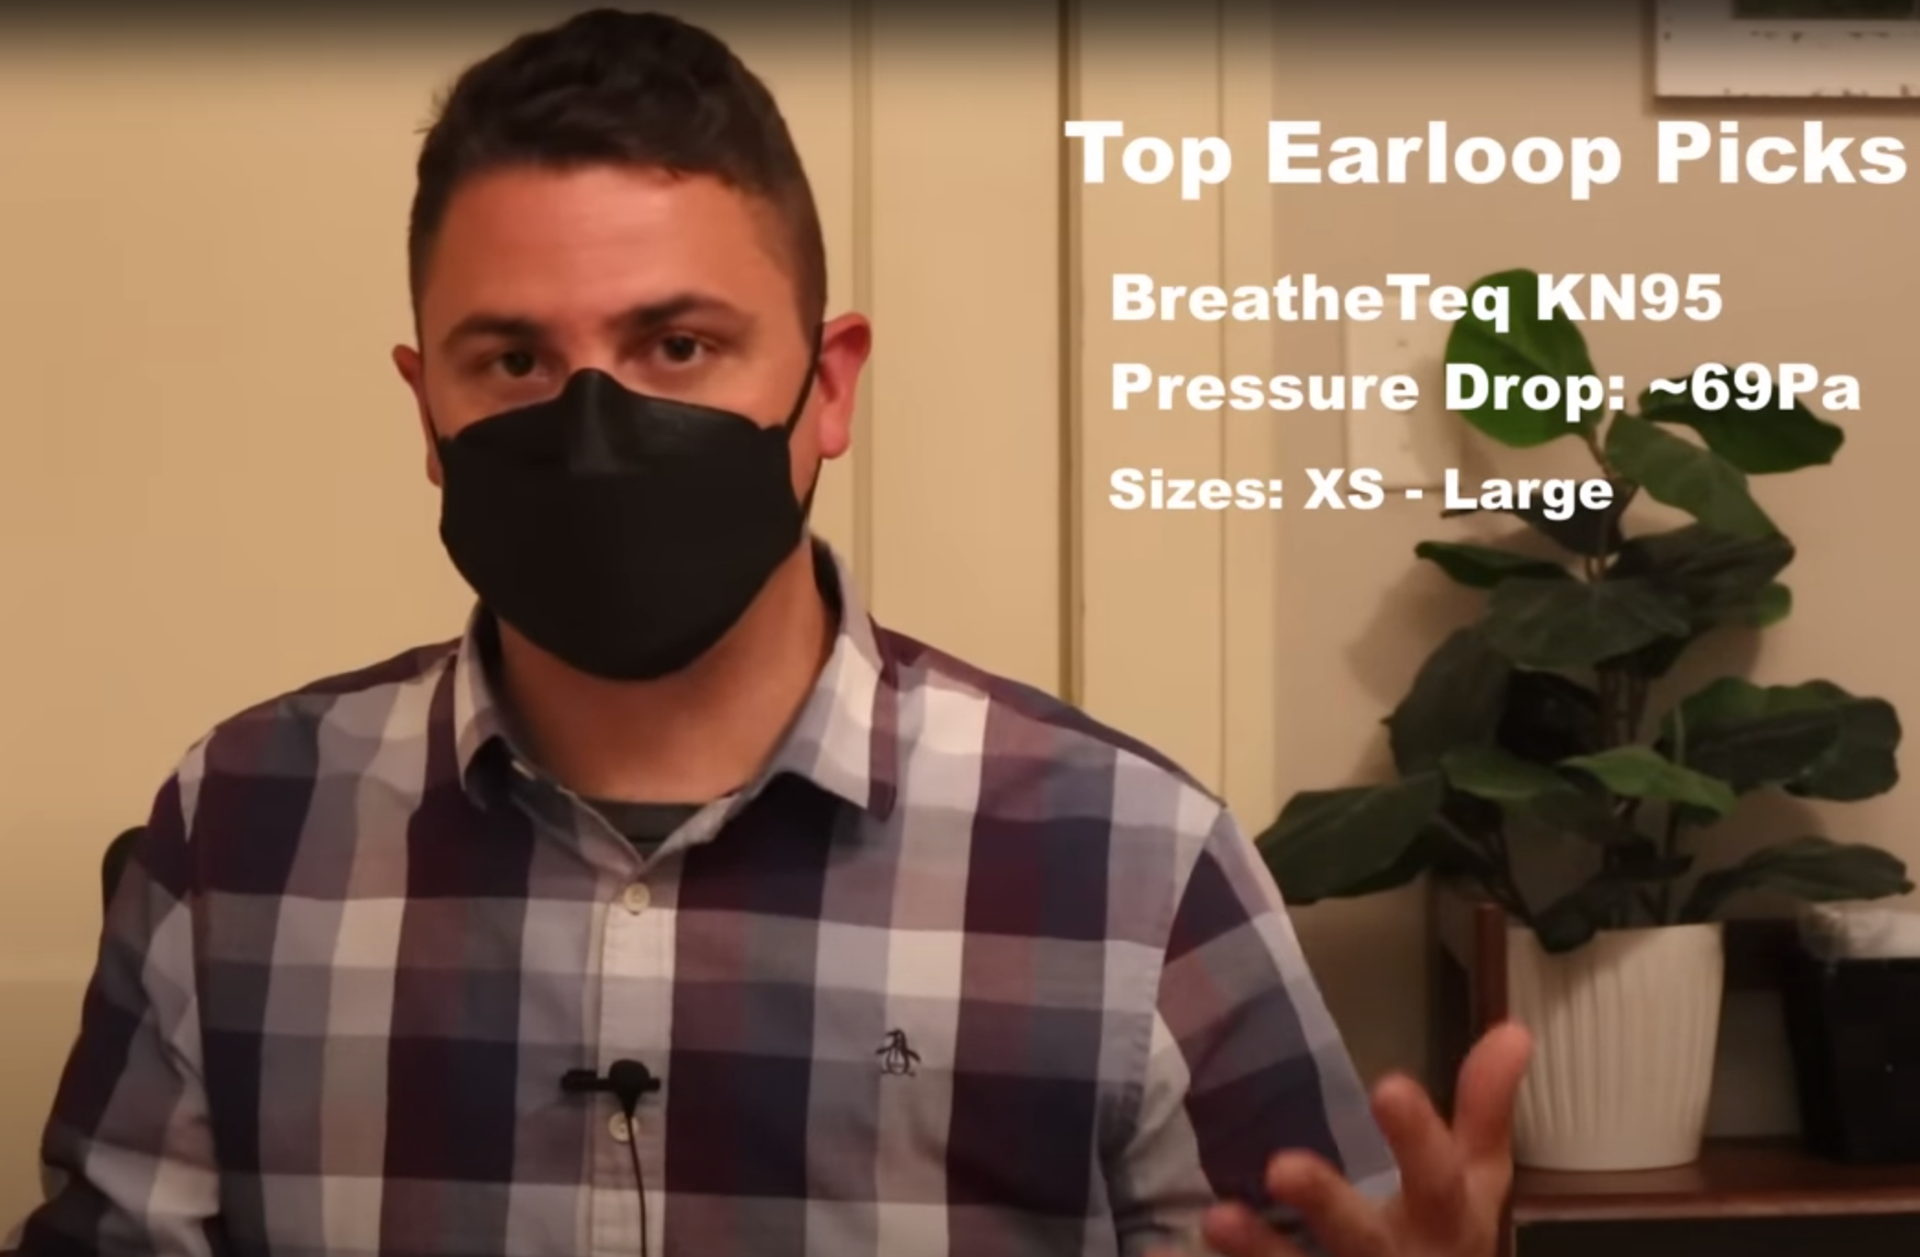 Load video: Engineer Aaron Collins aka Mask Nerd Youtube Review of BreatheTeq KN95 respirator mask